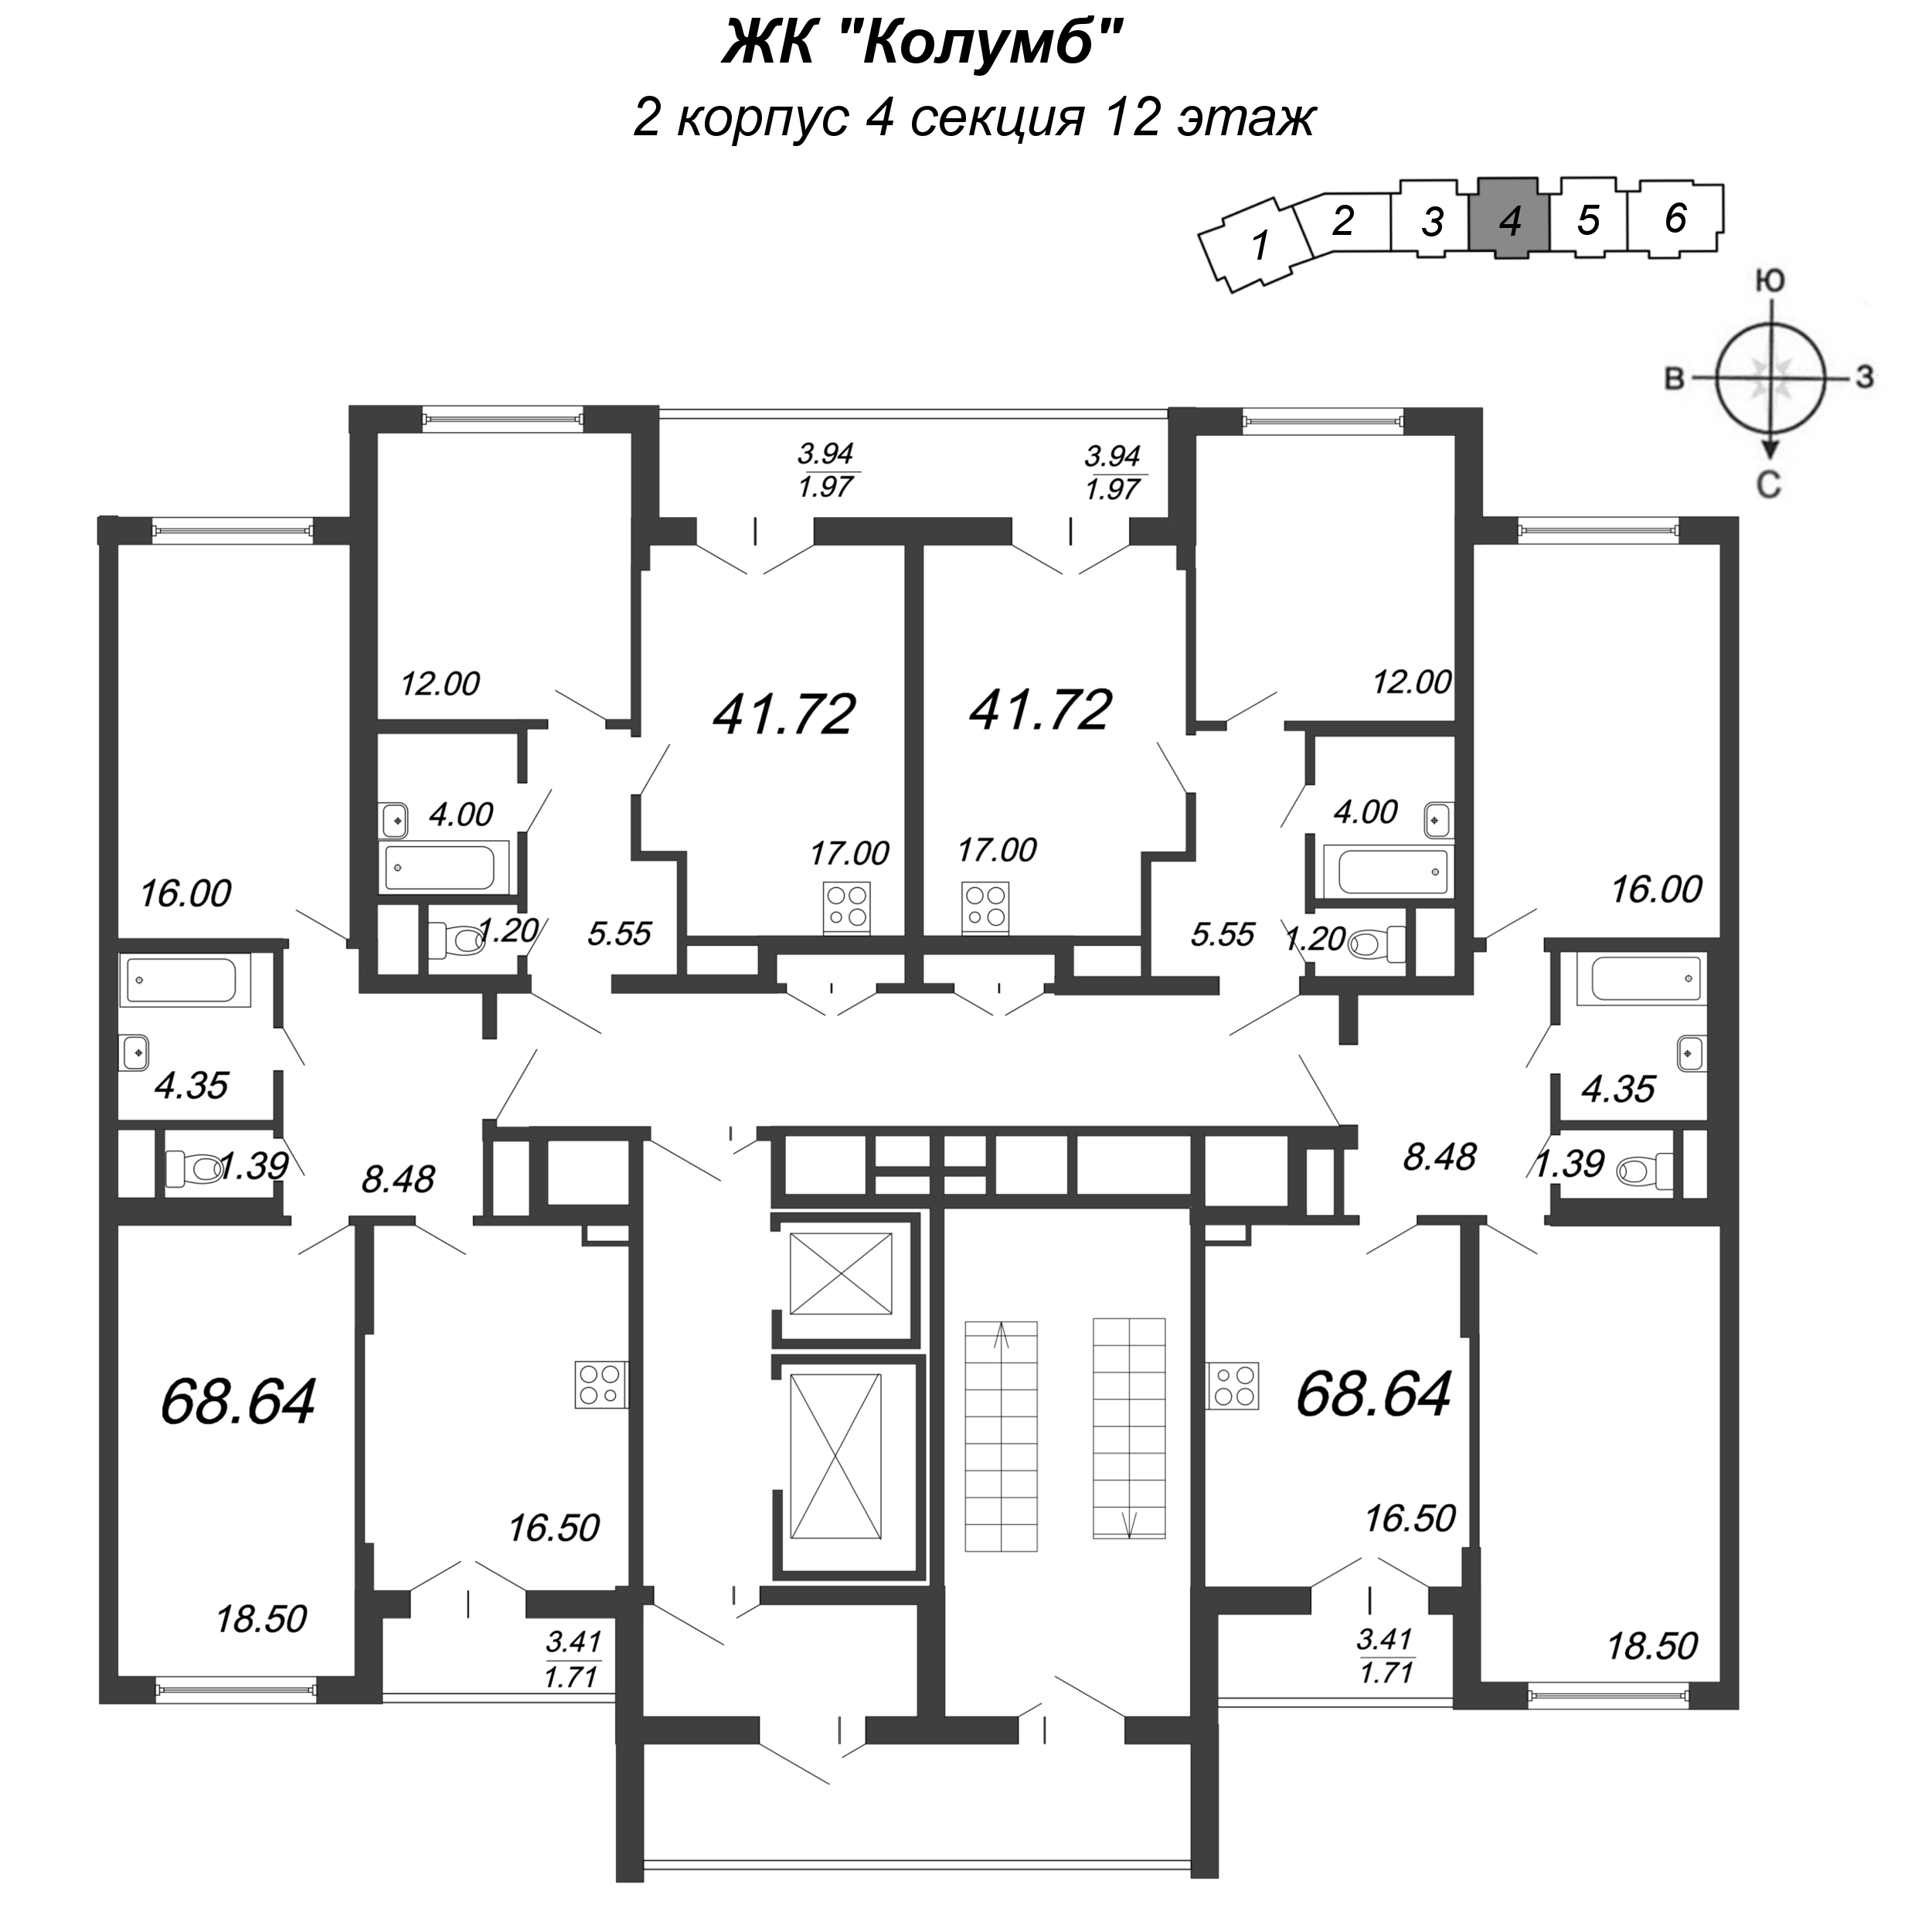 2-комнатная (Евро) квартира, 42.4 м² в ЖК "Колумб" - планировка этажа